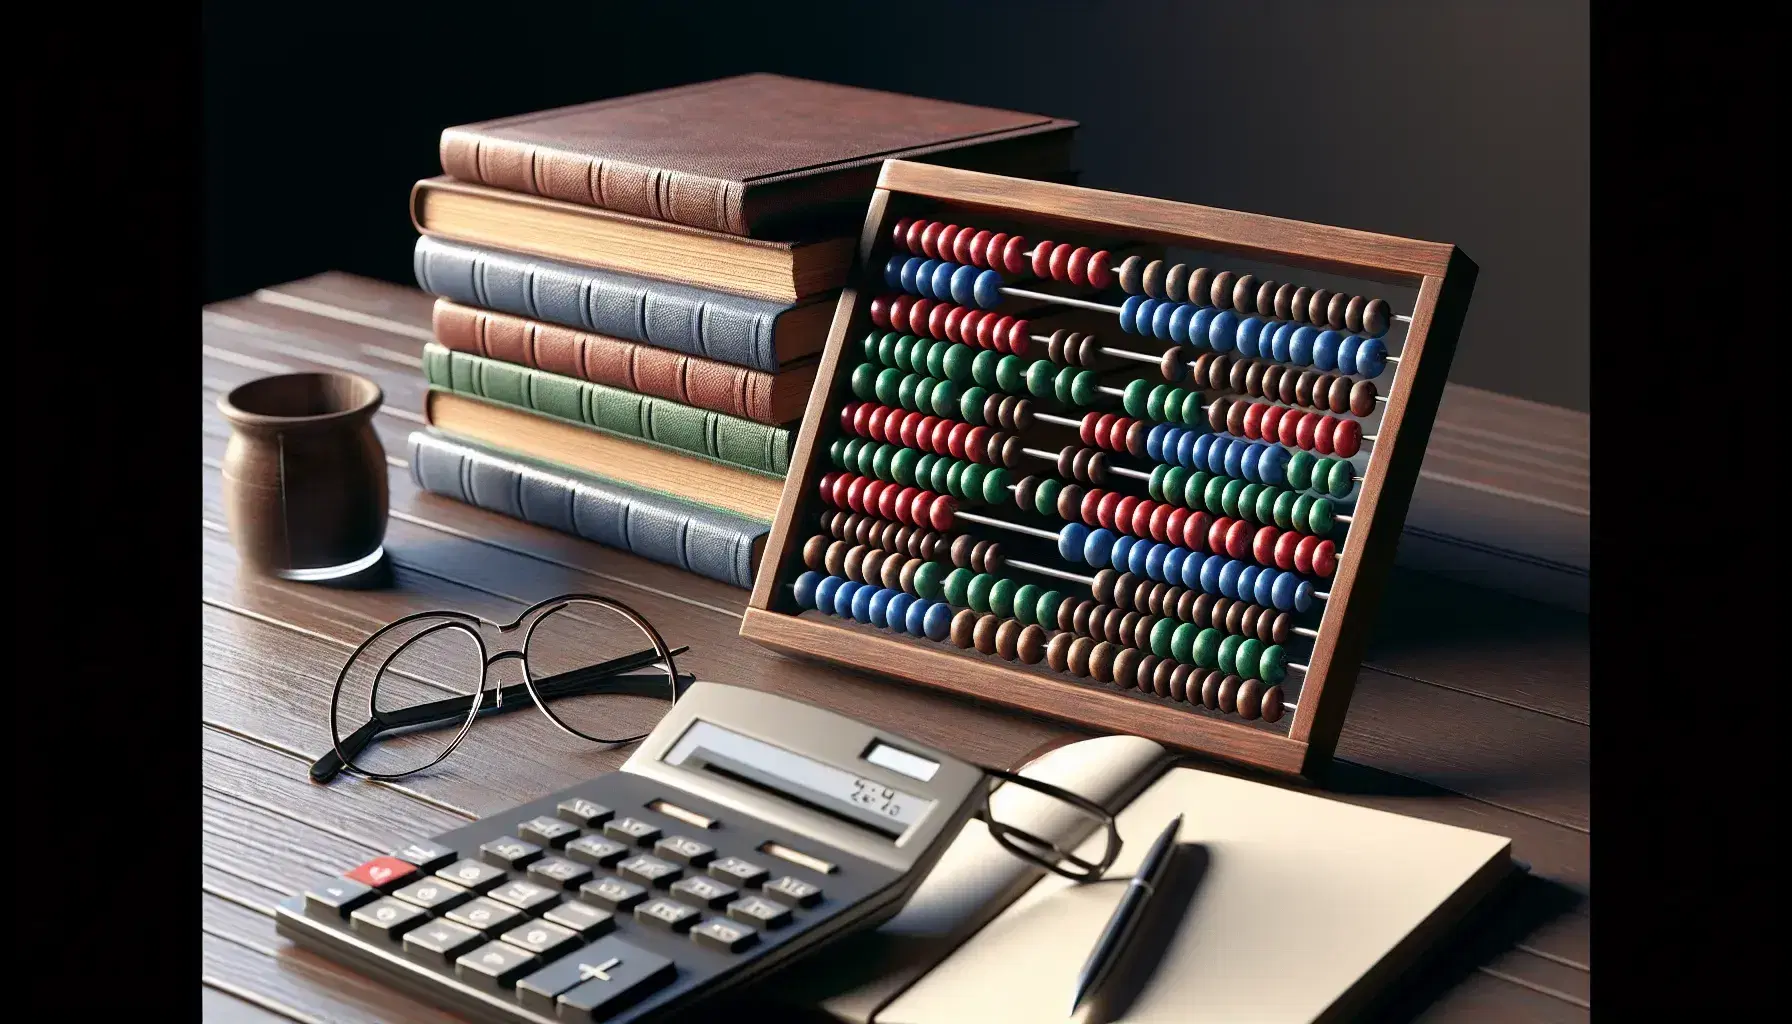 Escritorio de madera oscura con libros apilados, ábaco tradicional de colores, calculadora moderna y gafas sobre cuaderno abierto bajo luz natural.